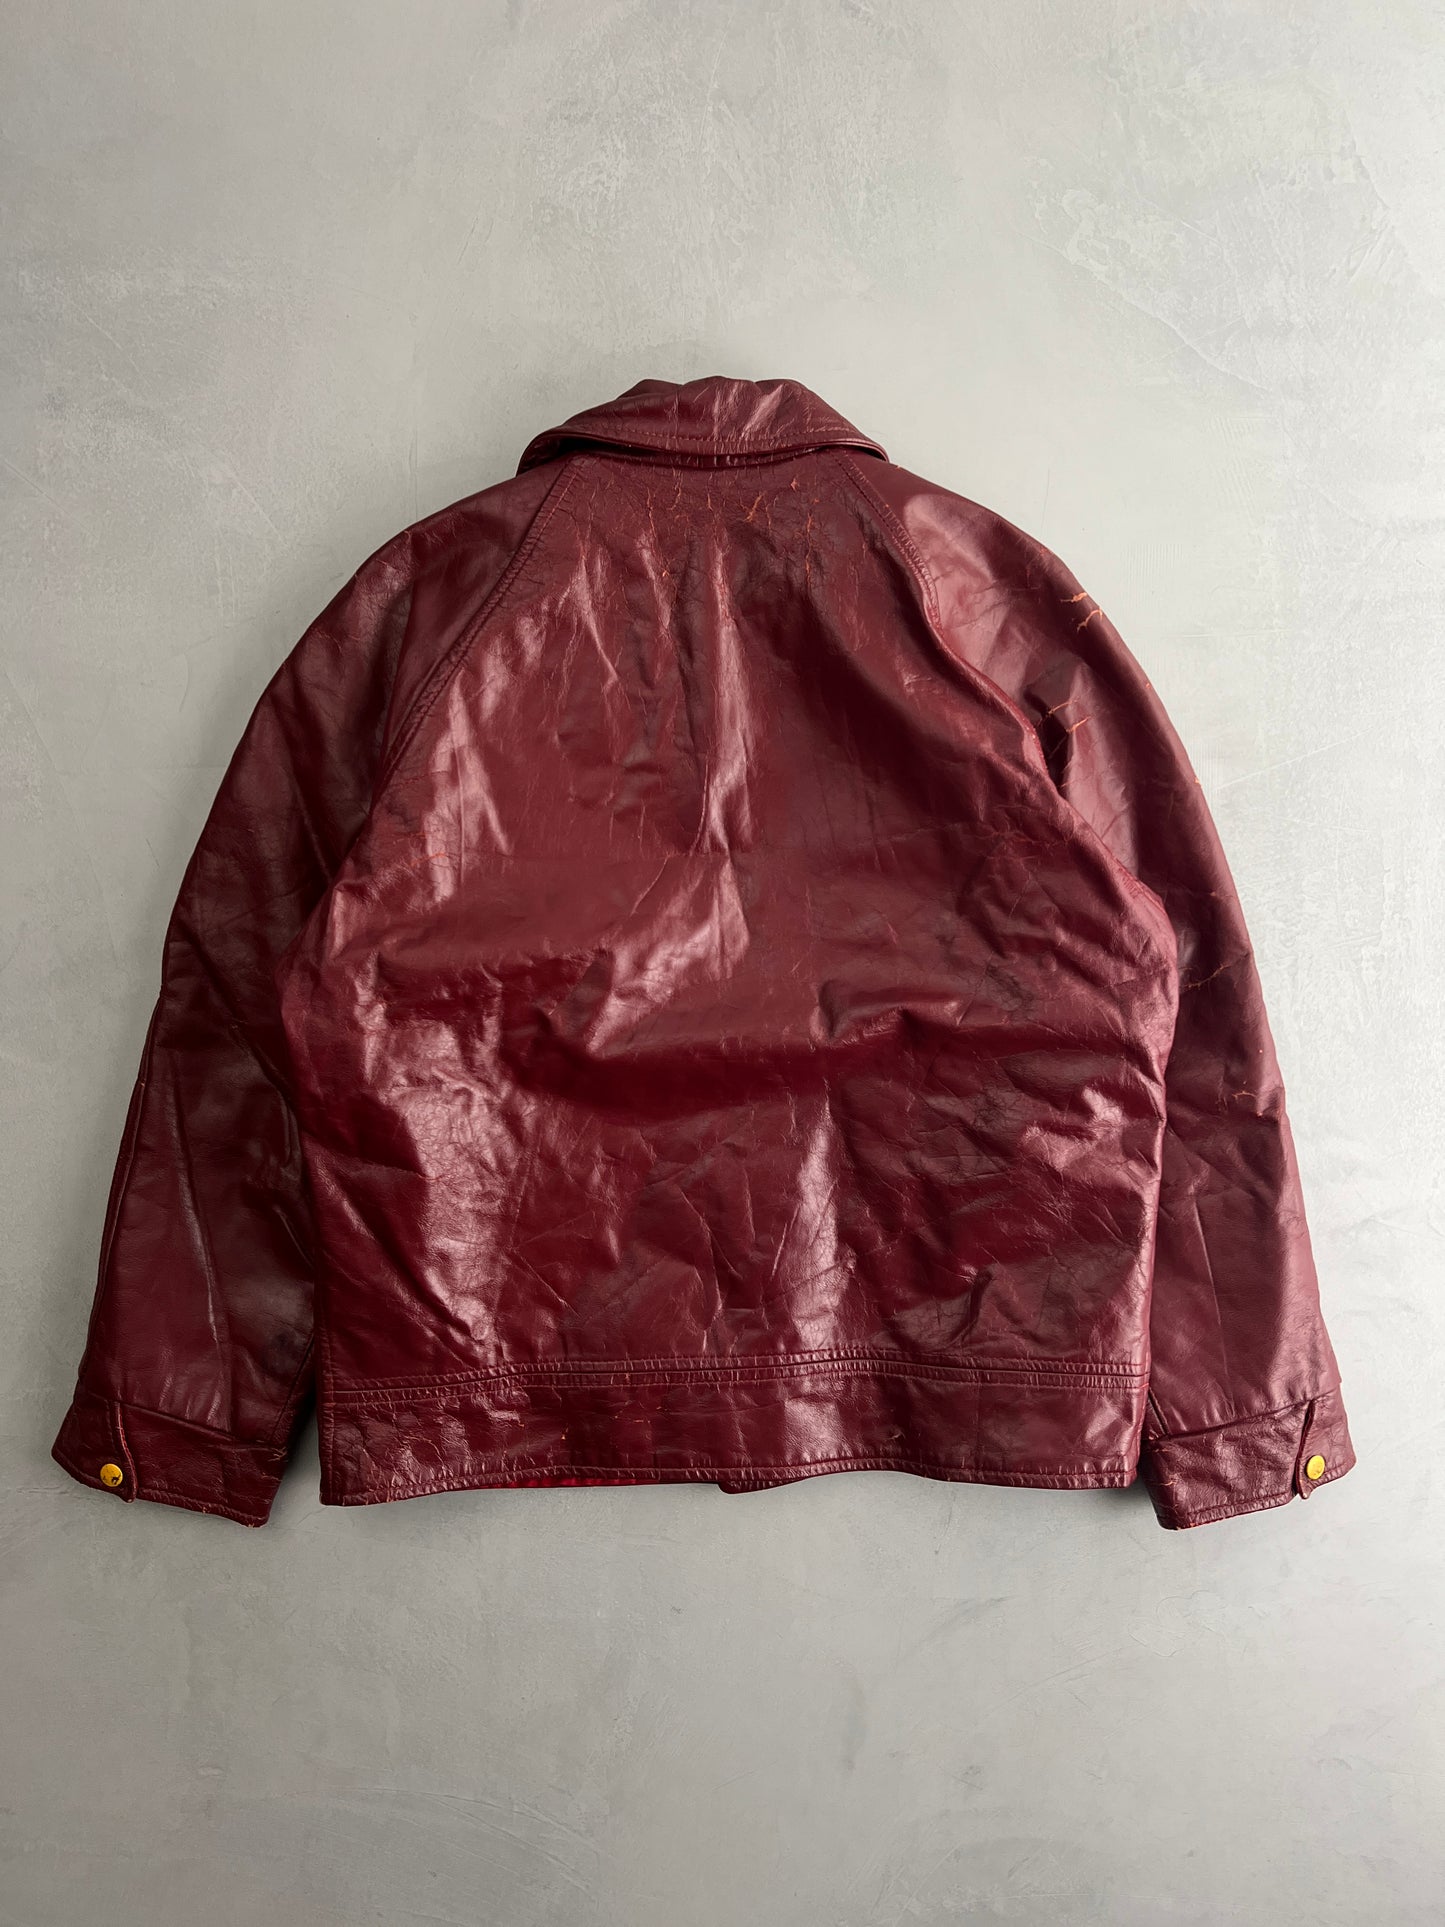 50's / 60's K.T.L. Transport Leather Jacket [L]